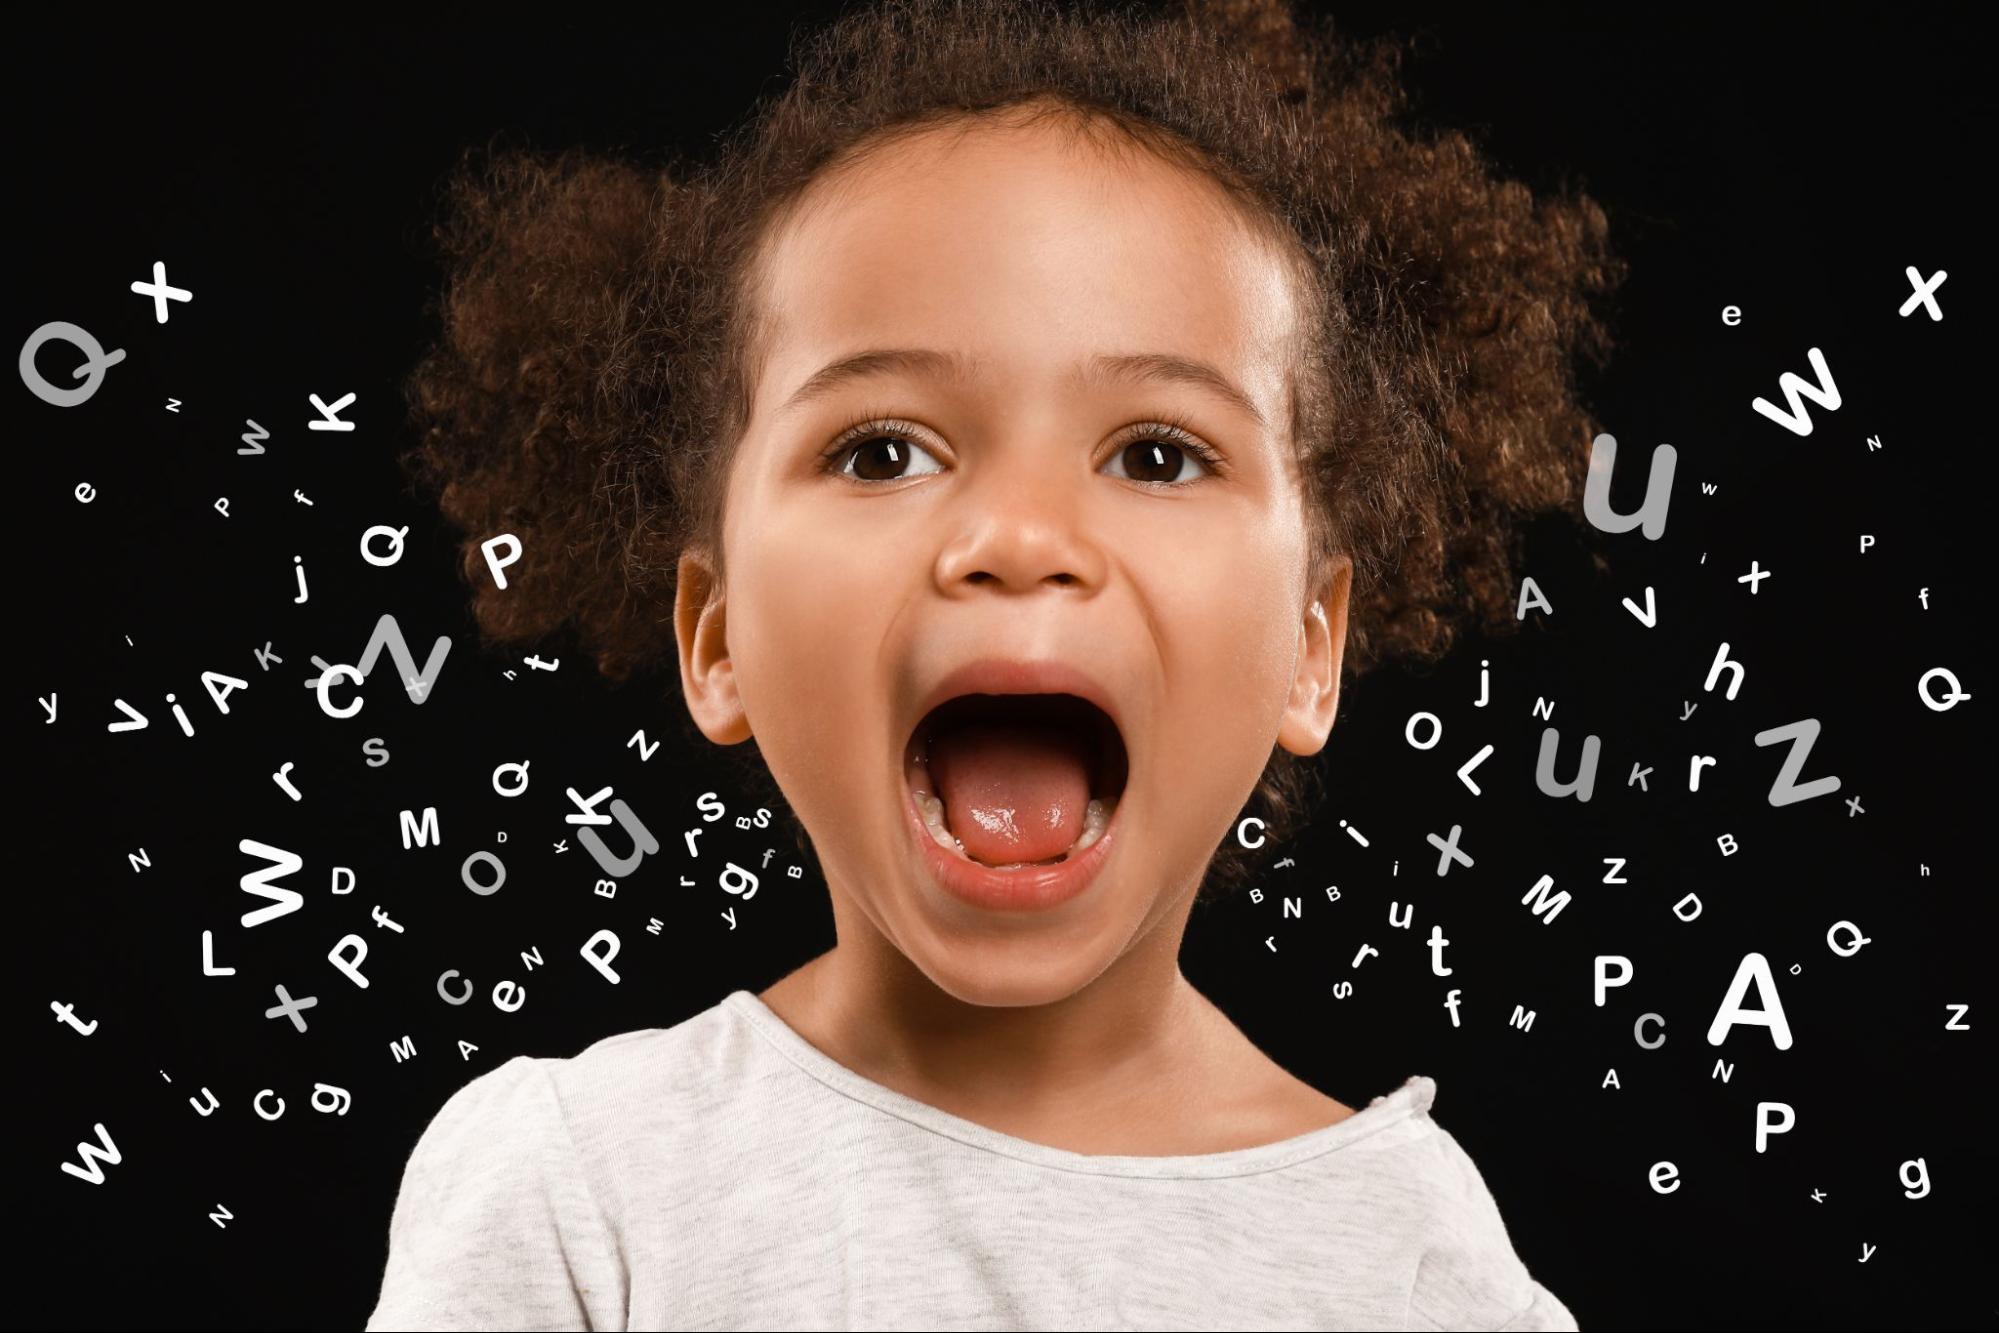 speech development in childhood